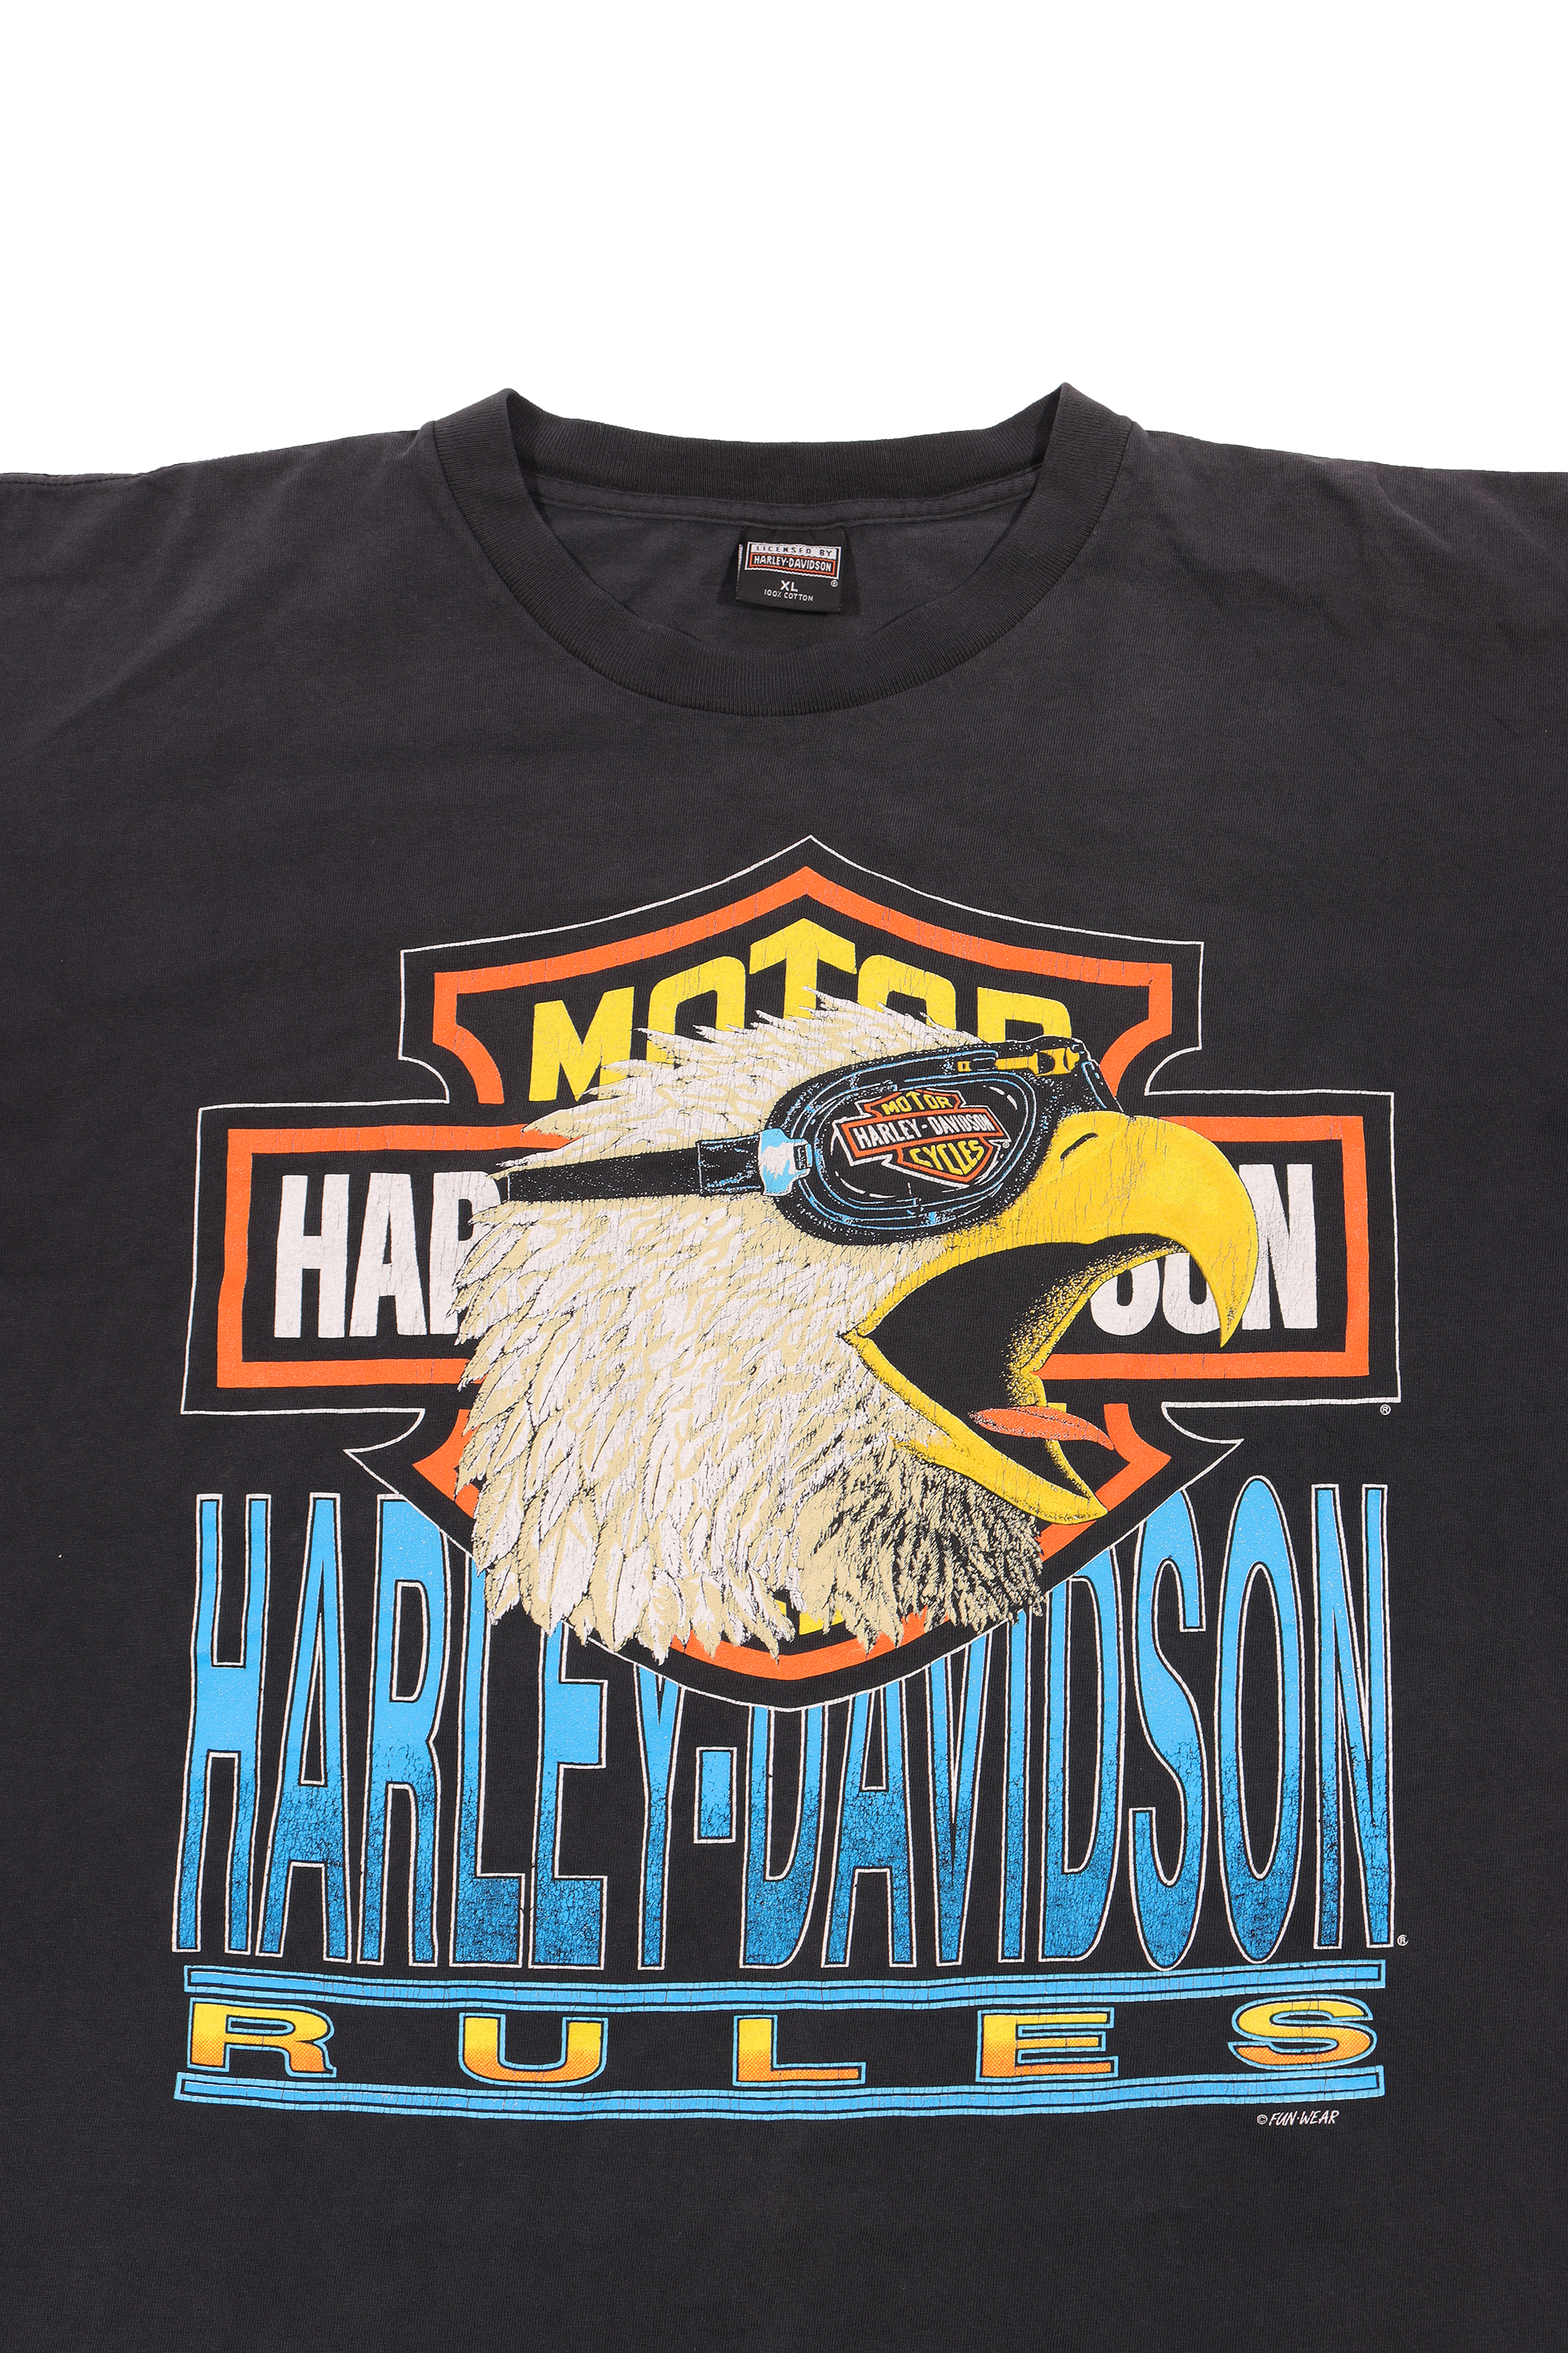 1980's Harley Davidson